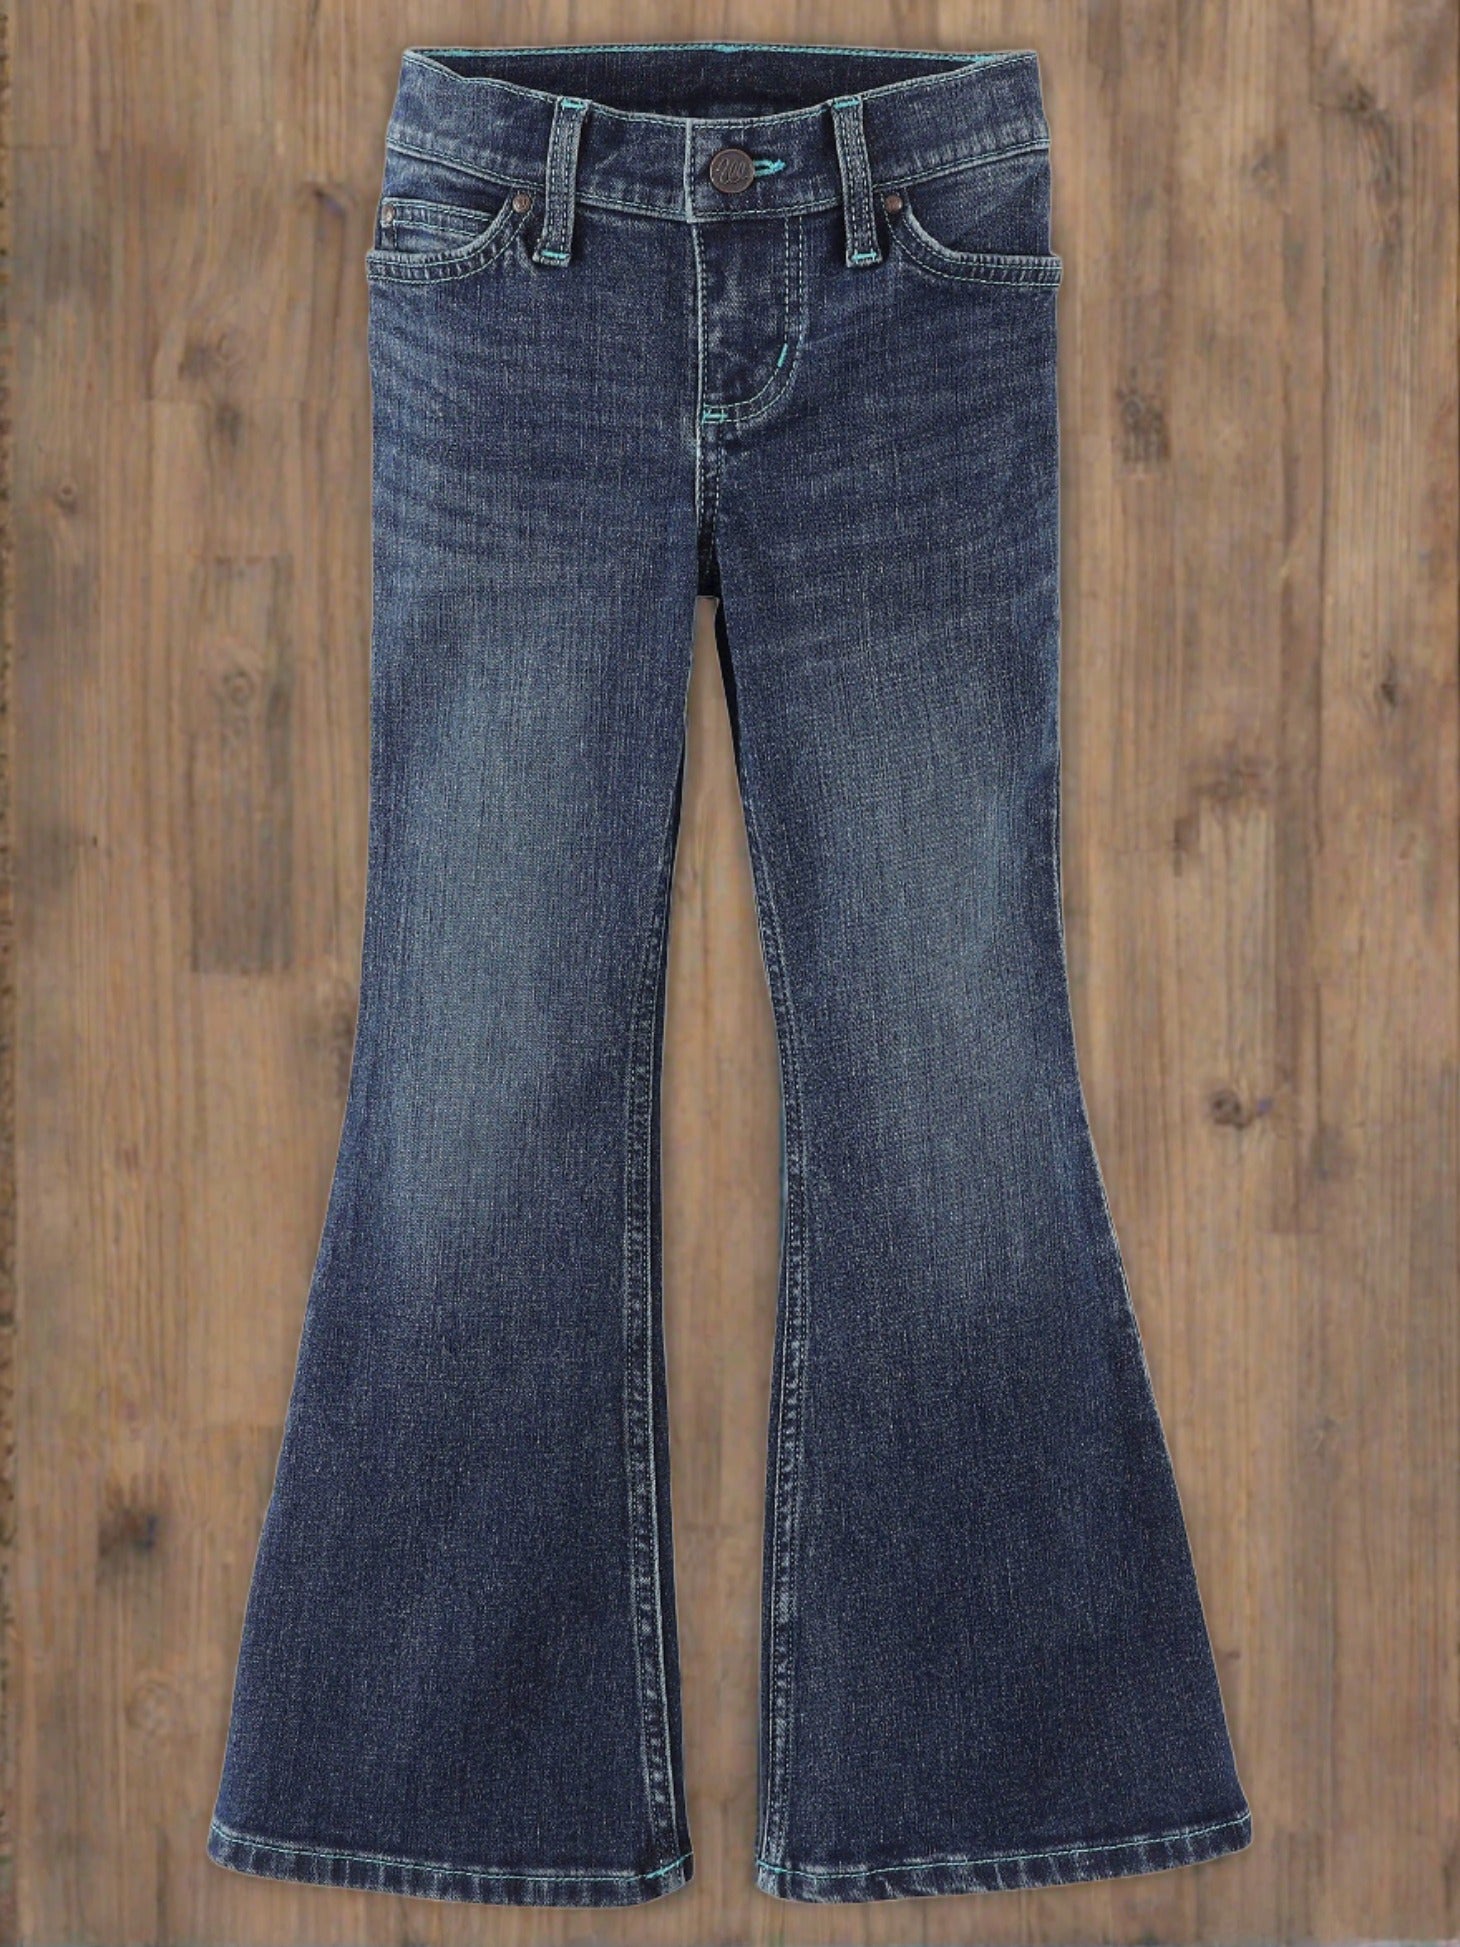 fcity.in - Trendy Looks Girl Denim Bell Bottom Jeans Solid Bottom Trendy  Look In